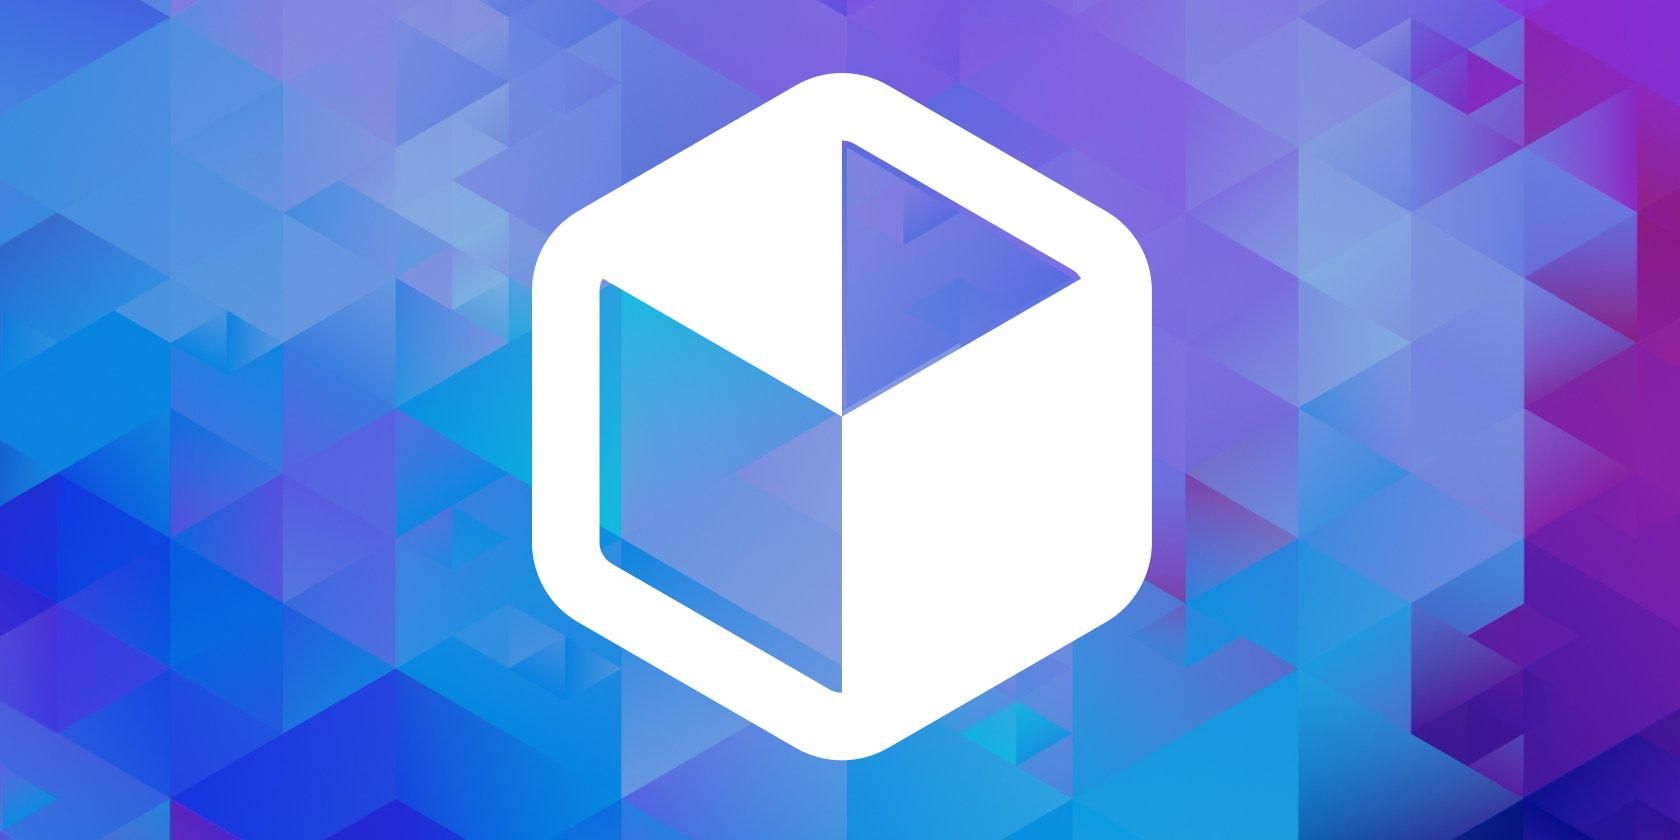 Flatpak’s white cube logo against a default GNOME Wallpaper